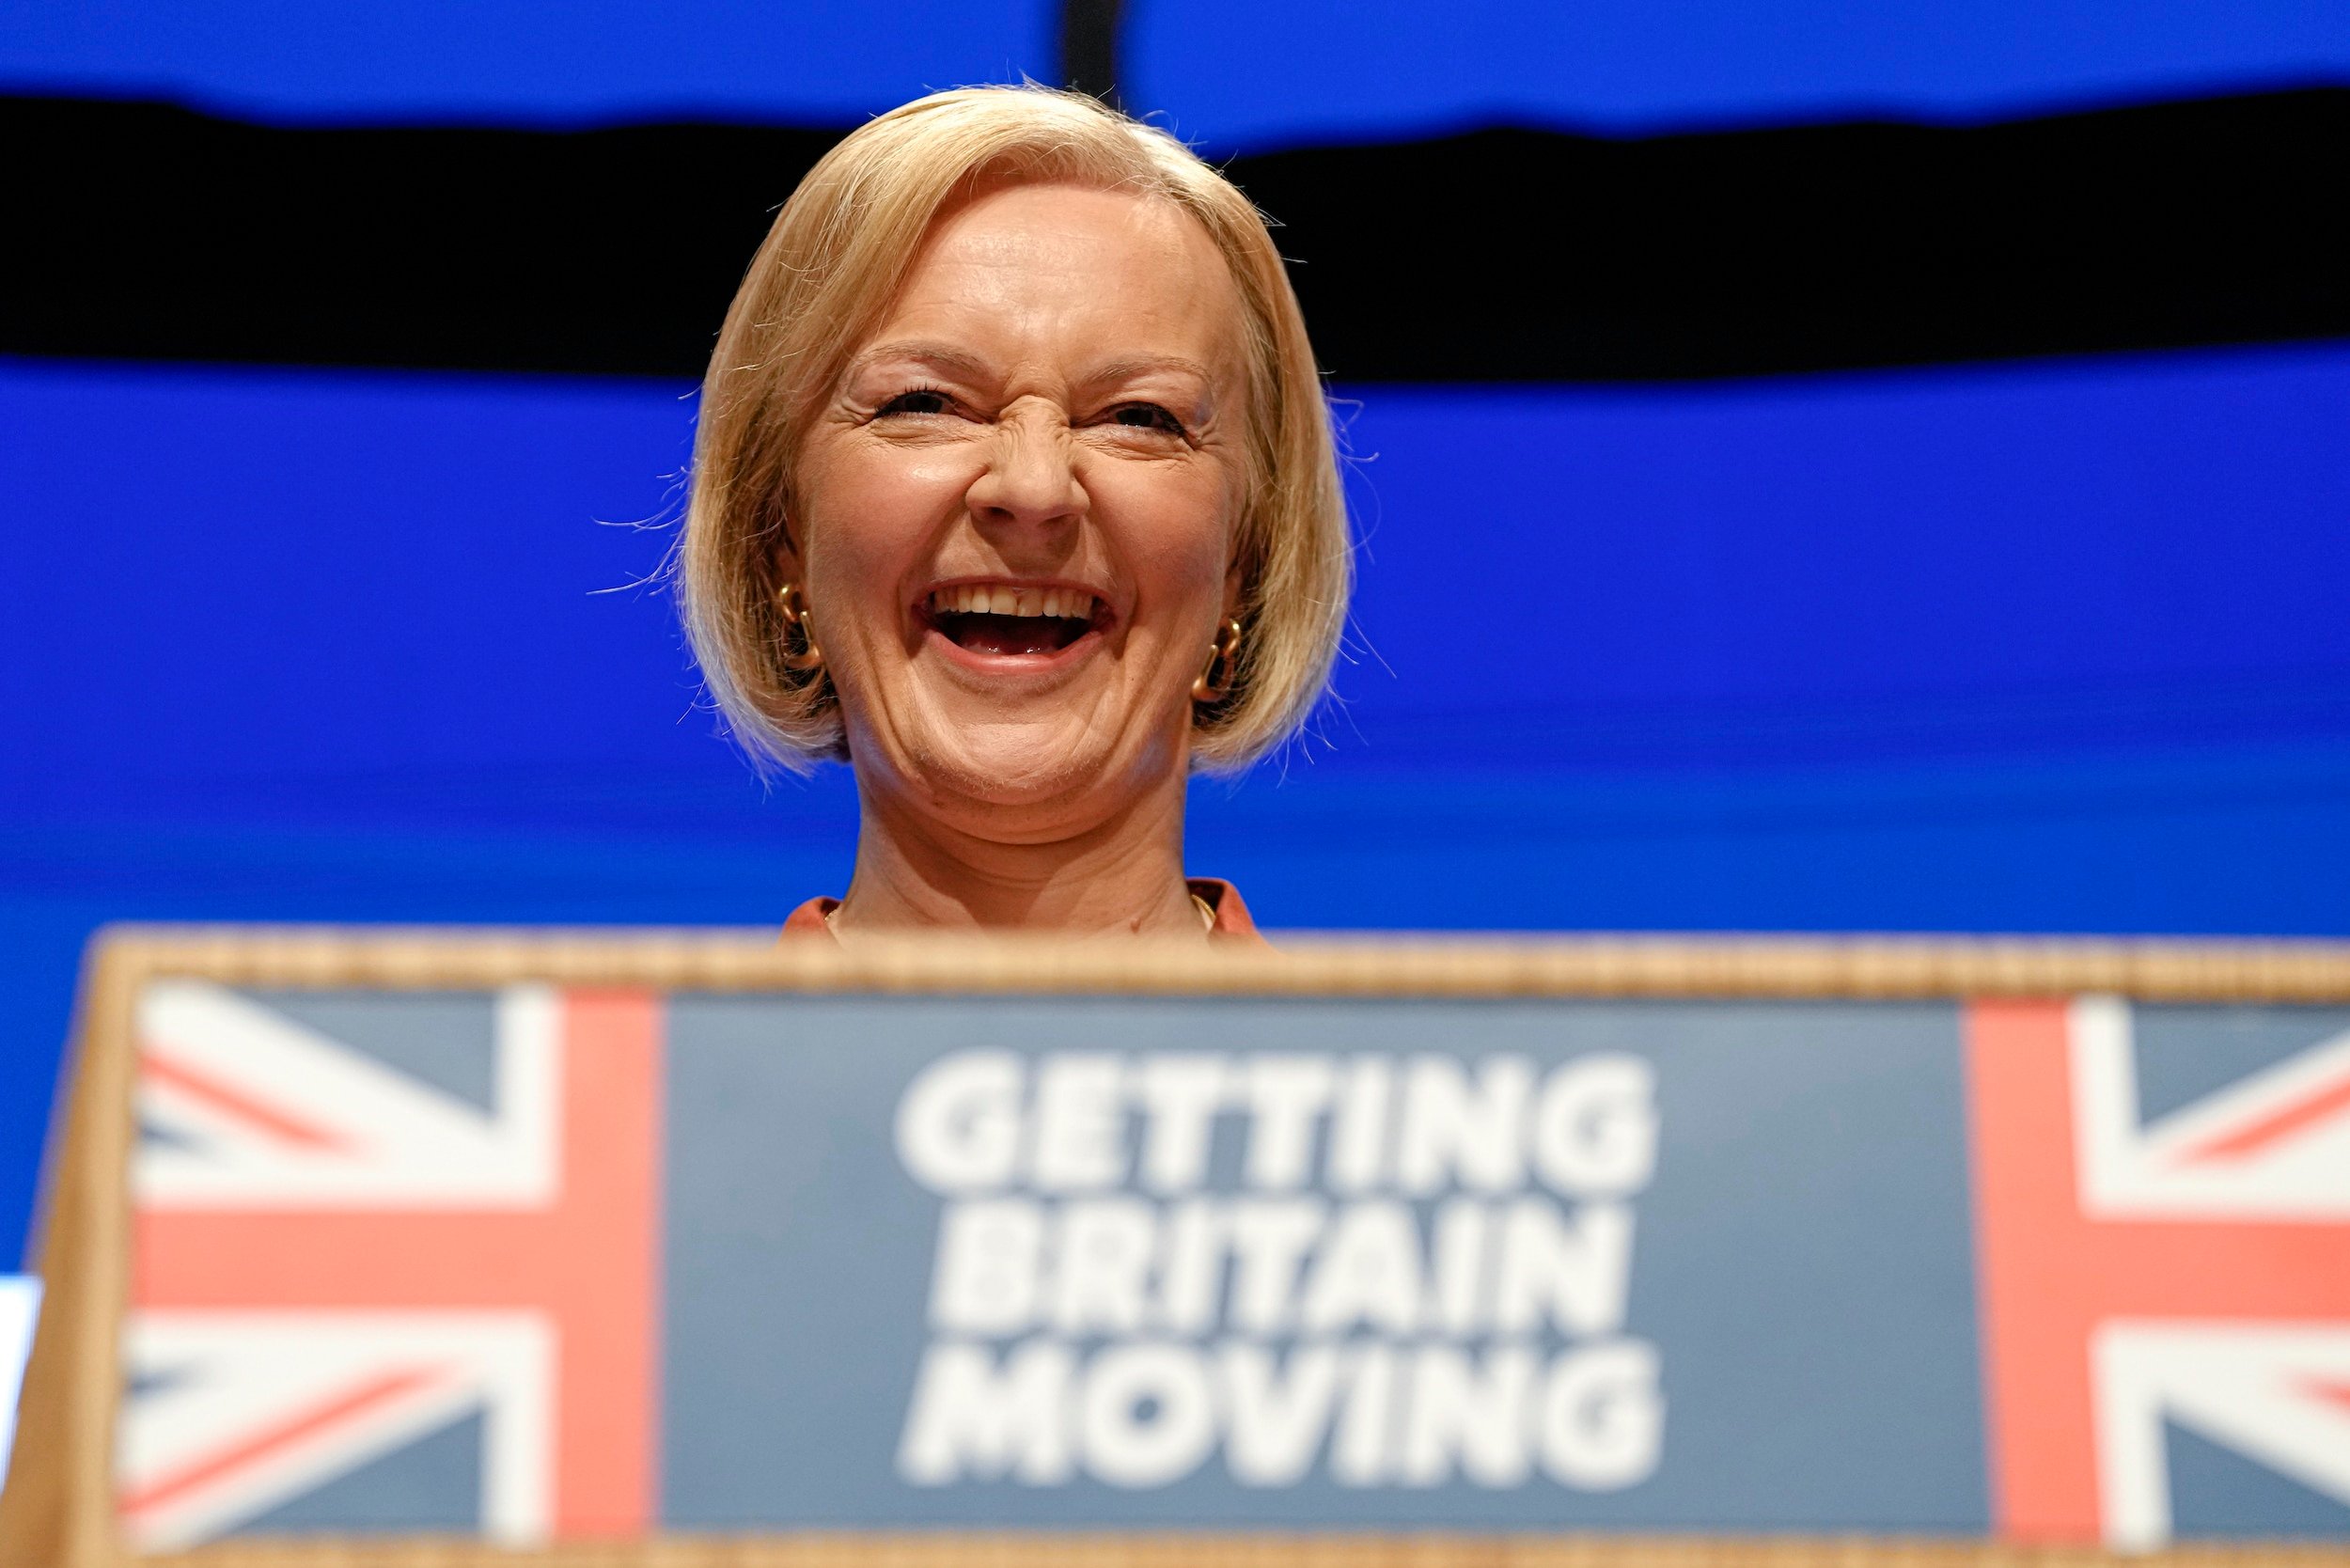 UK PM Liz Truss suggests welfare cuts to fund economic plan